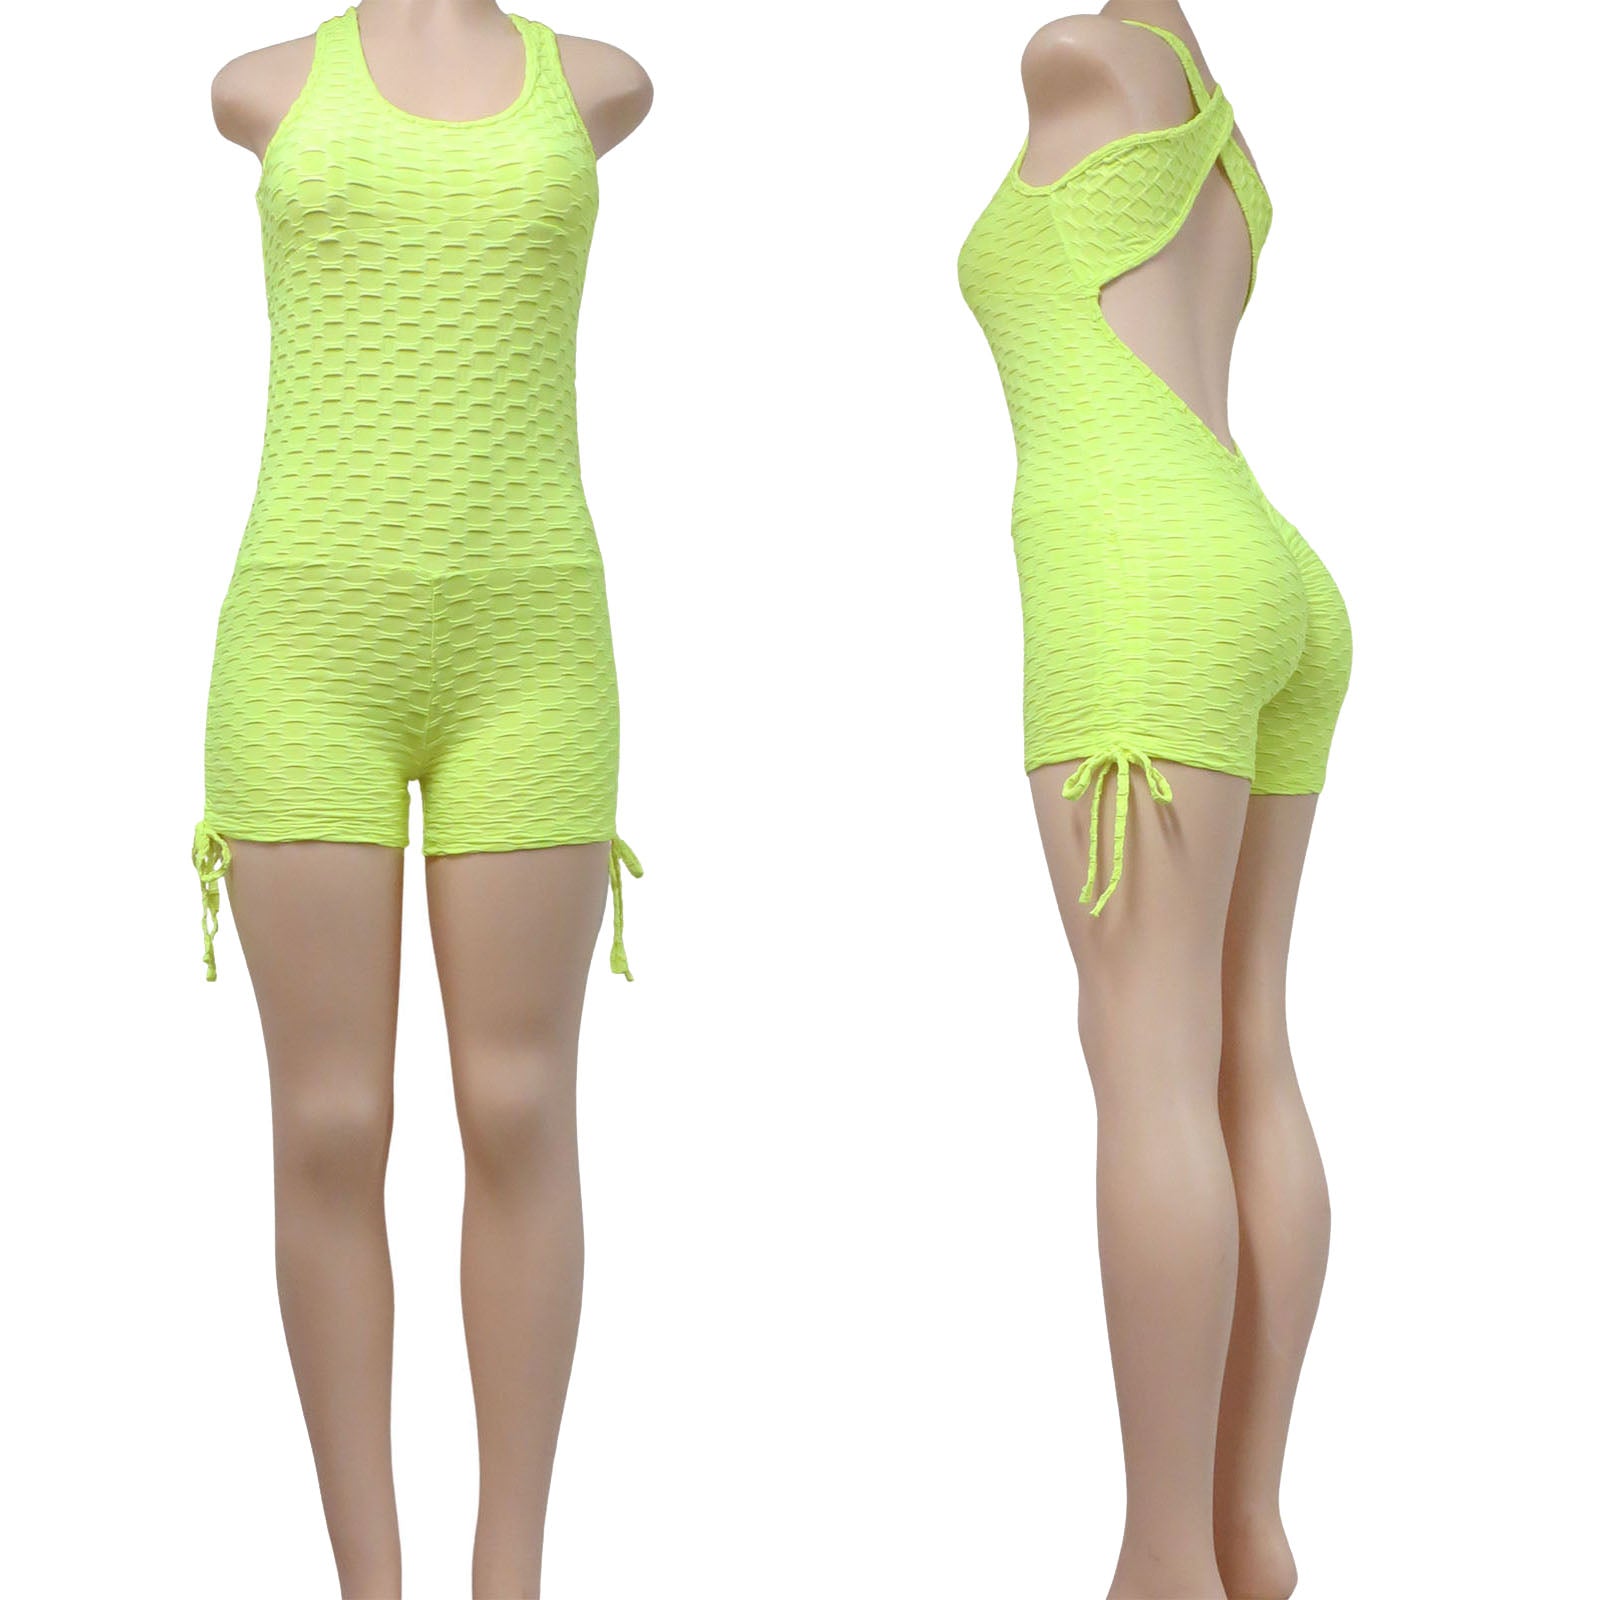 Wholesales Sleeveless Jumper Body Suit Women